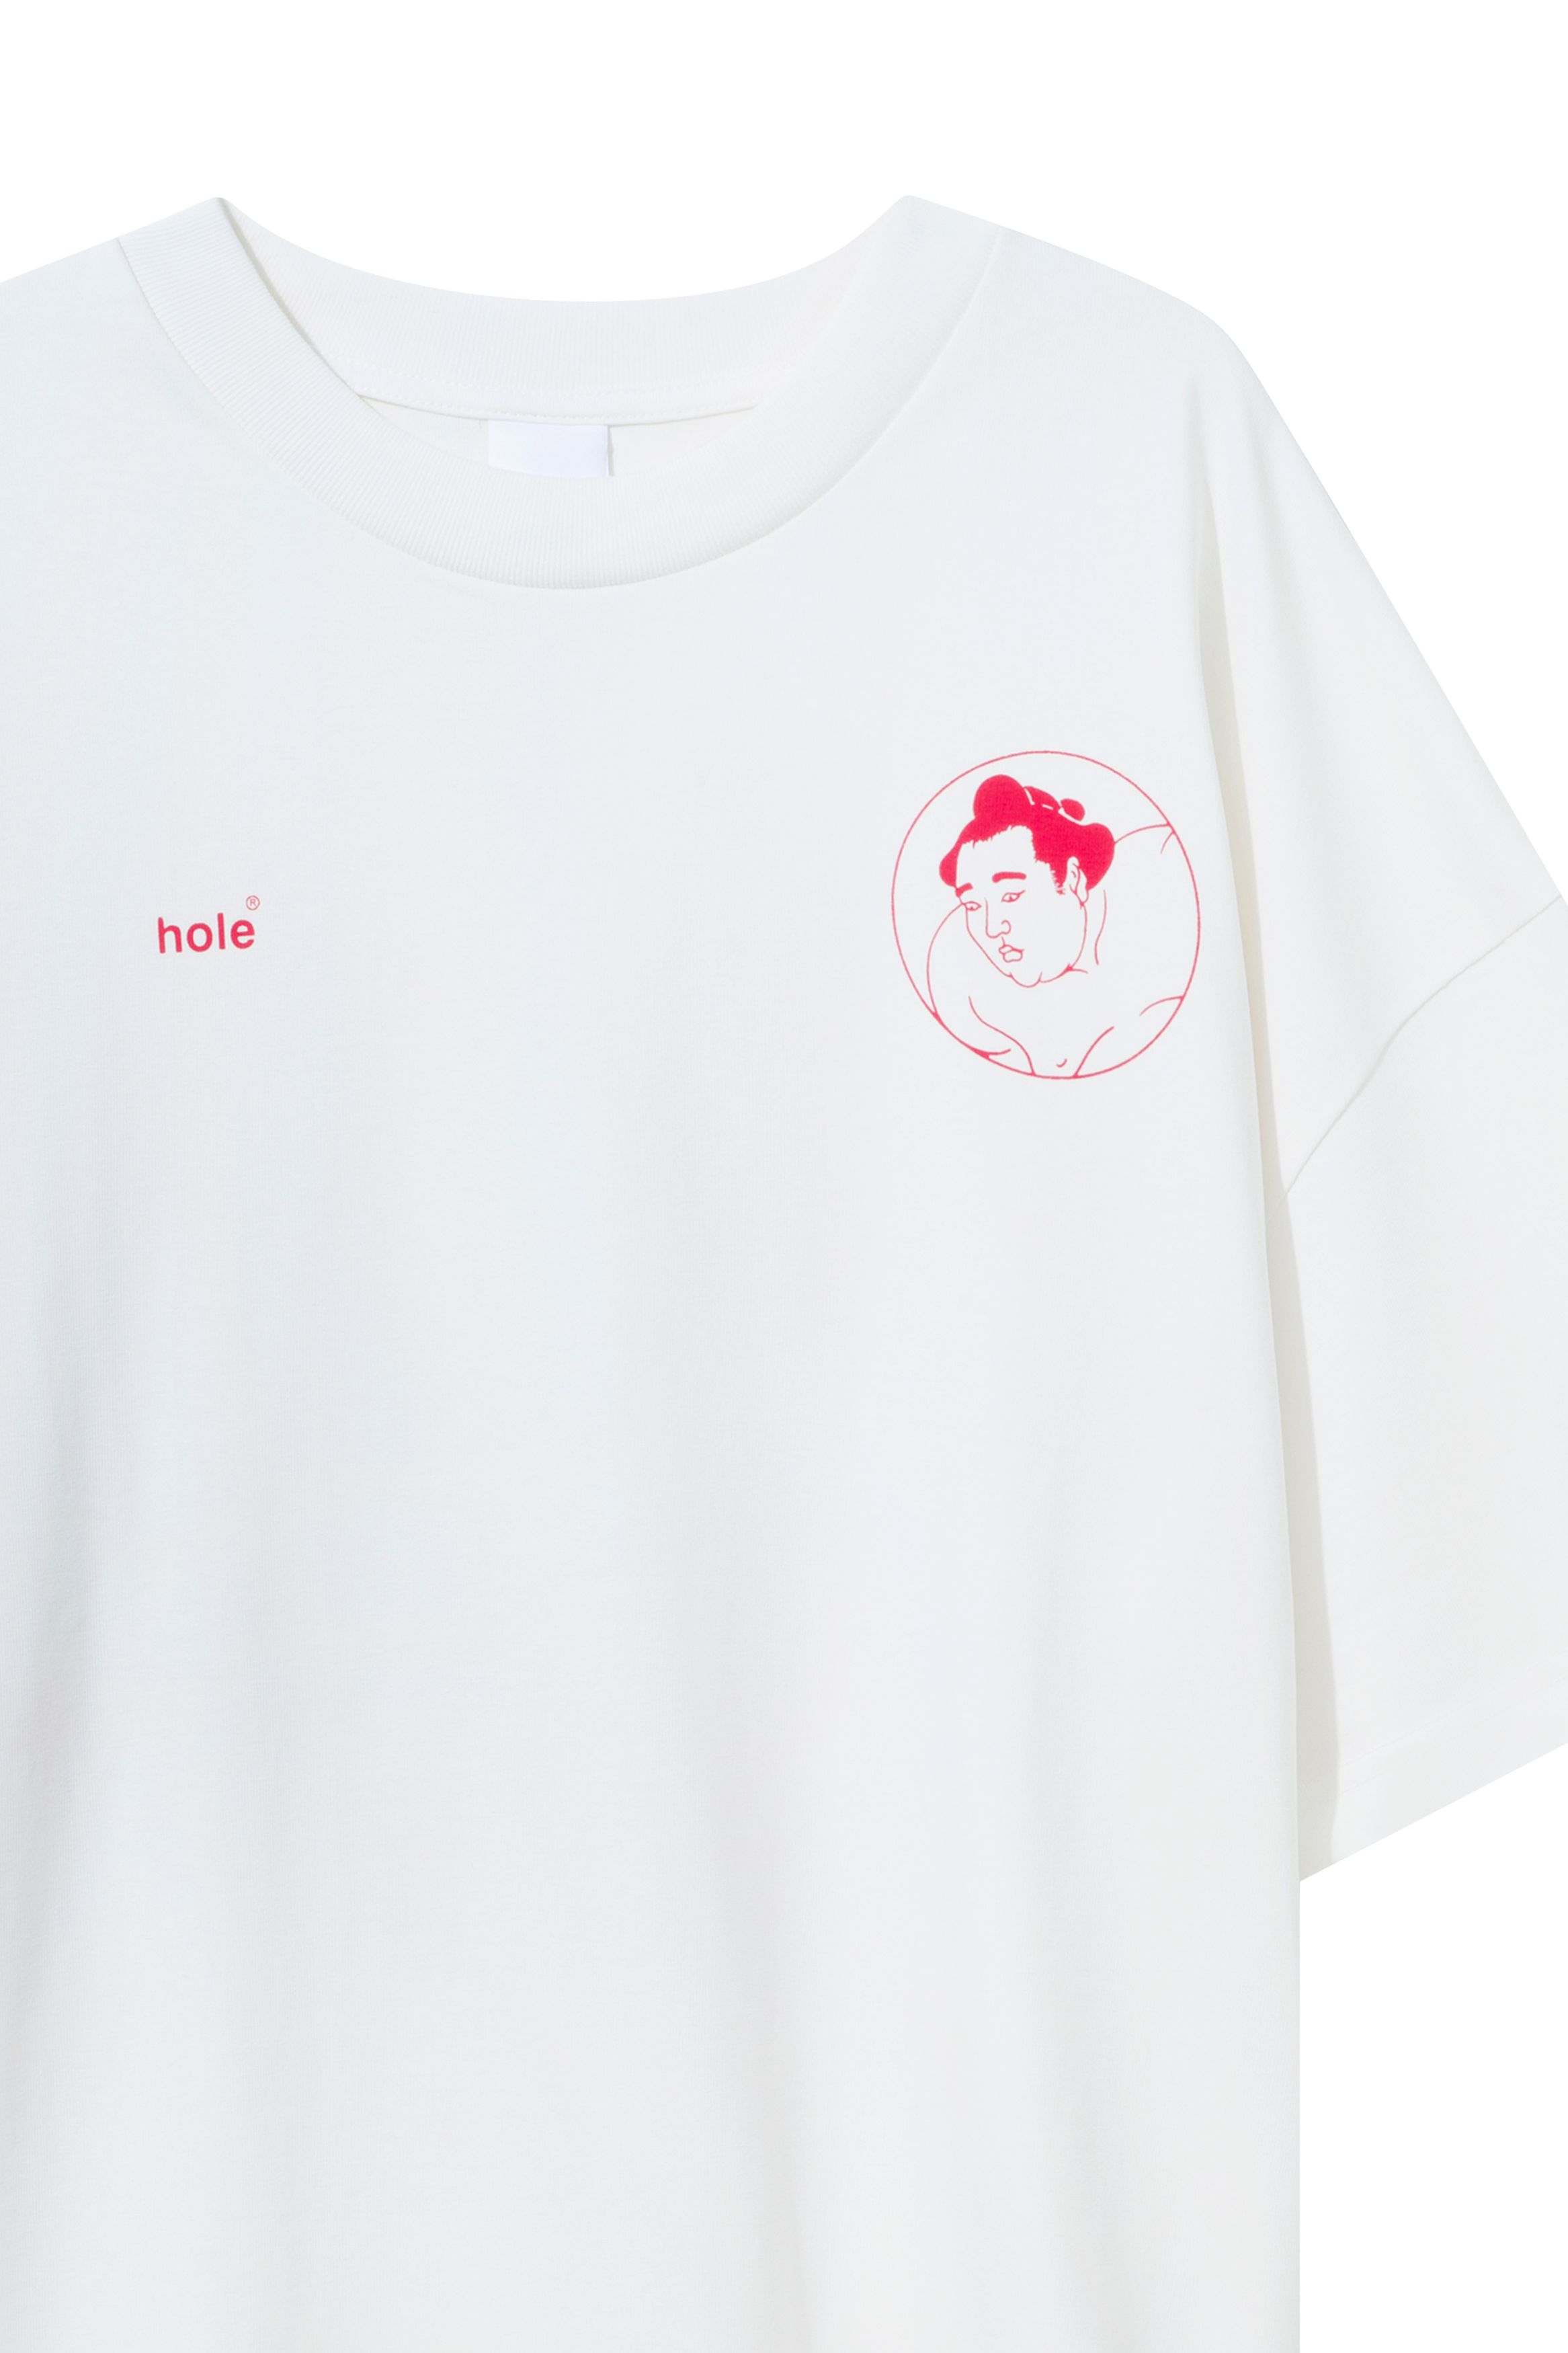 Hole Sumo Baskı T-Shirt